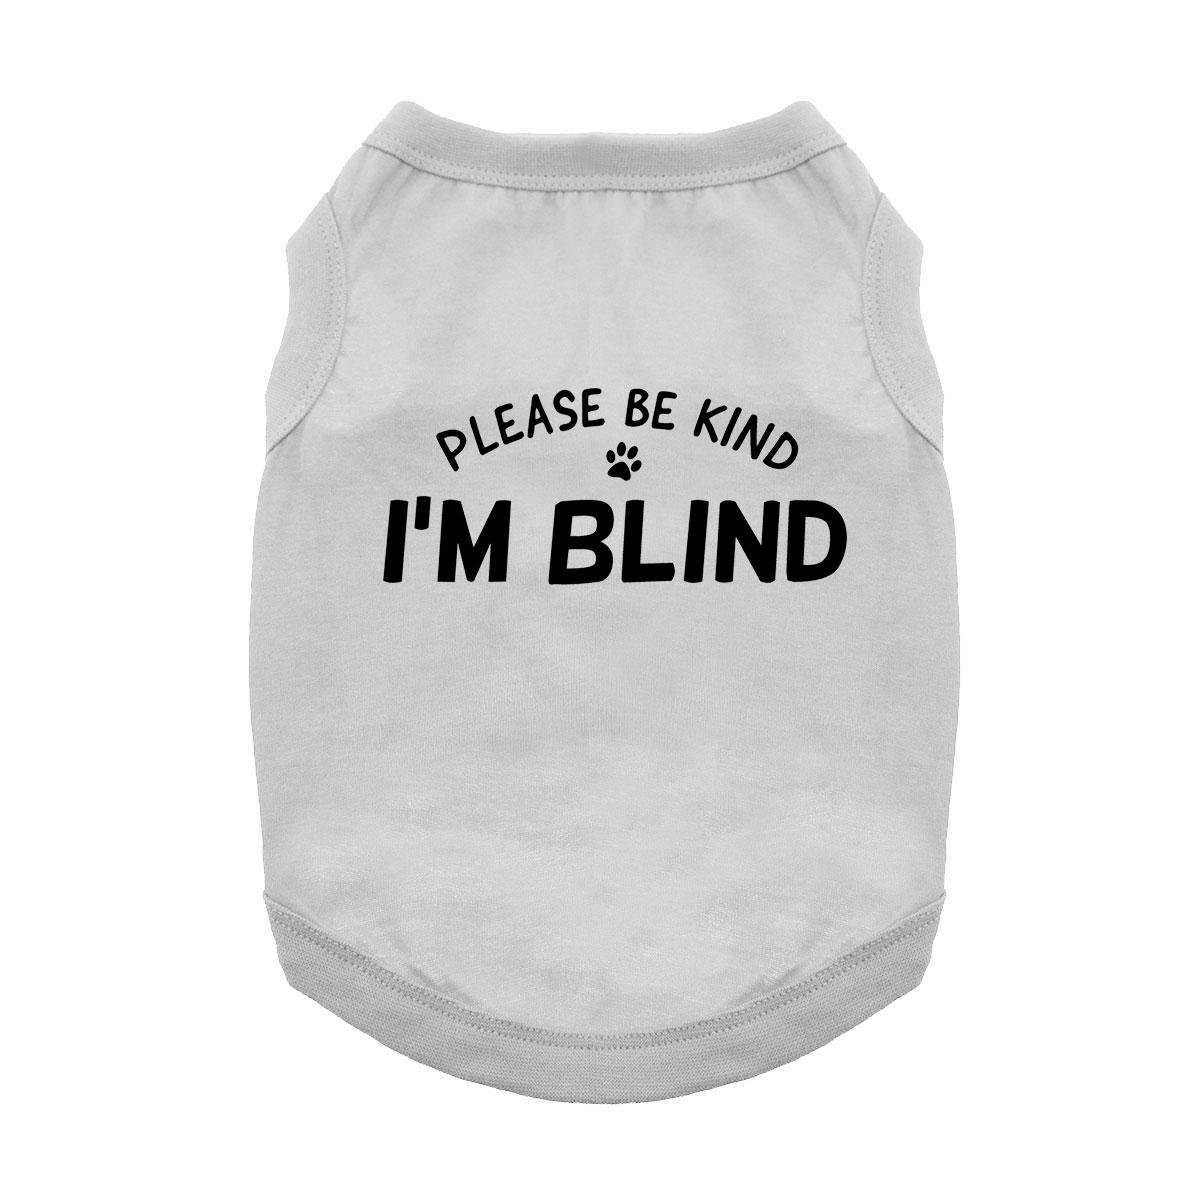 Please Be Kind, I'm Blind Dog Shirt - Gray